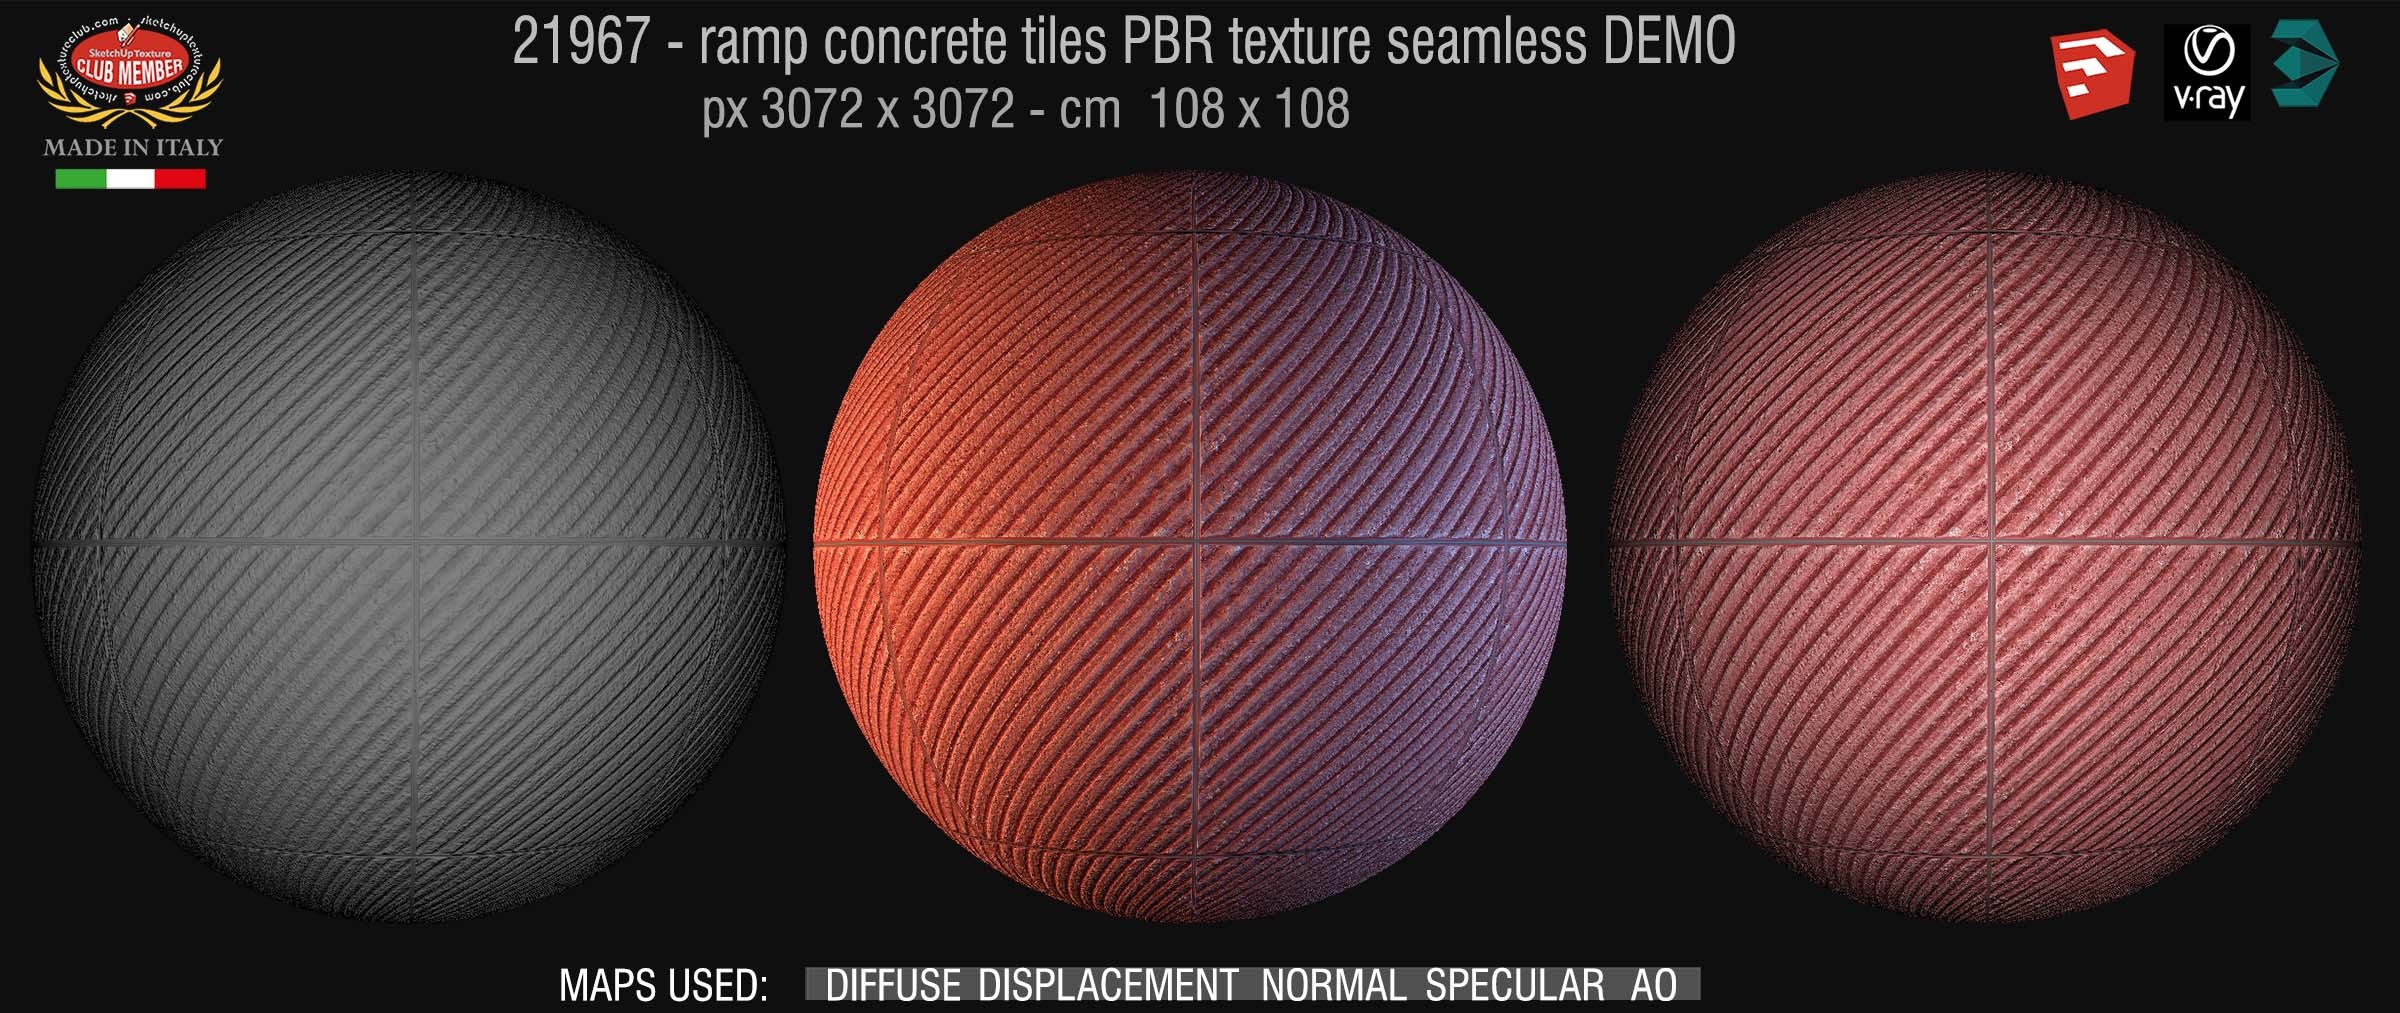 21967 Ramp concrete tiles PBR texture seamless DEMO